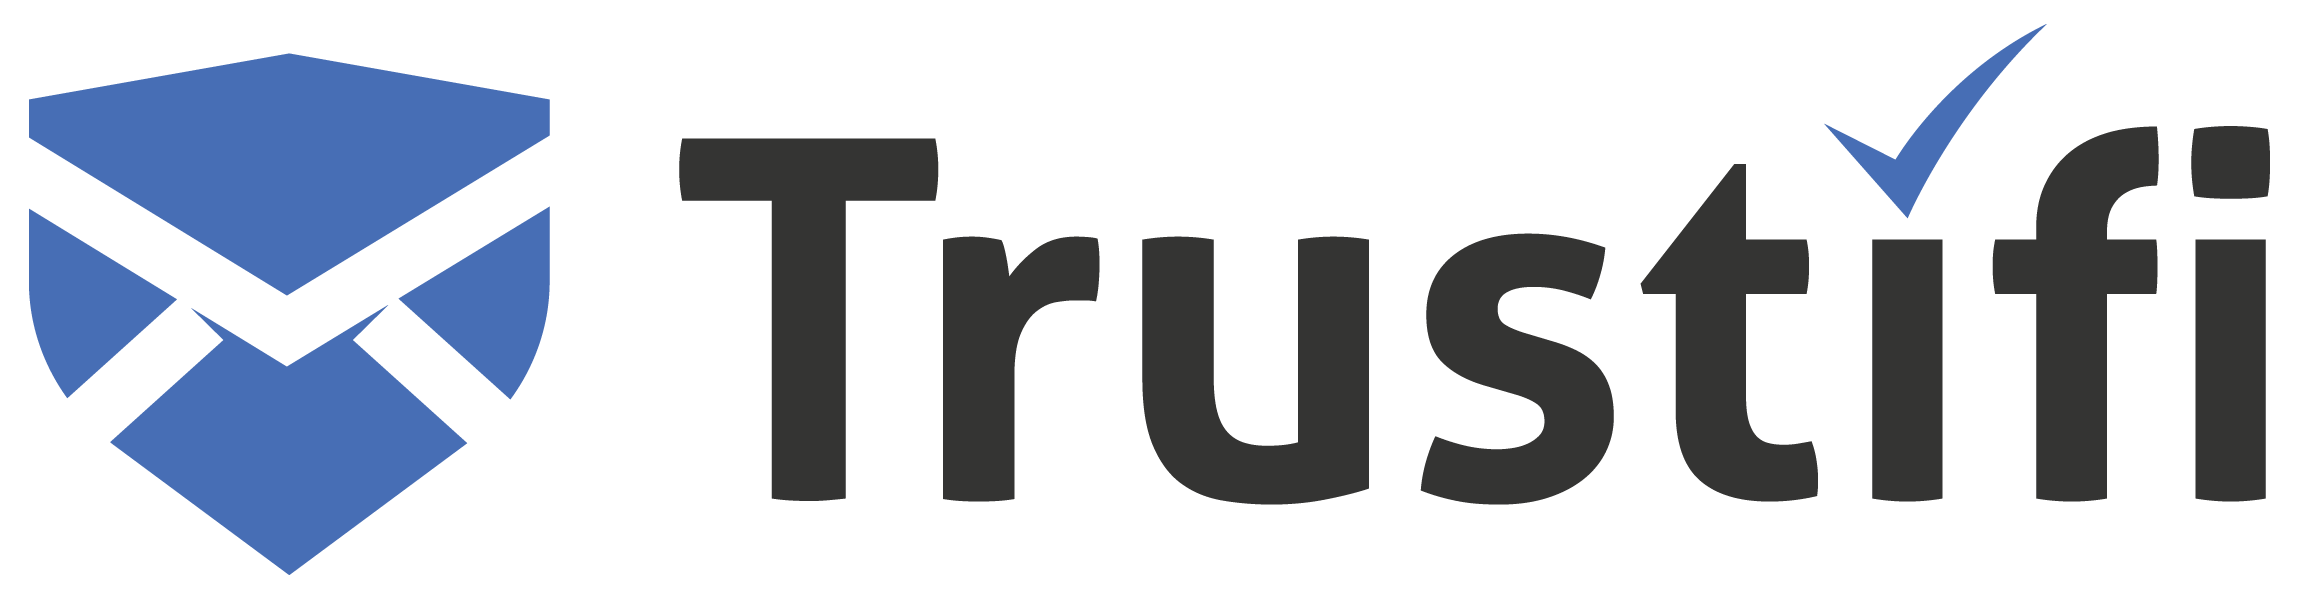 Trustifi-Logo-Blue-Black-horizontal-2300x600.png